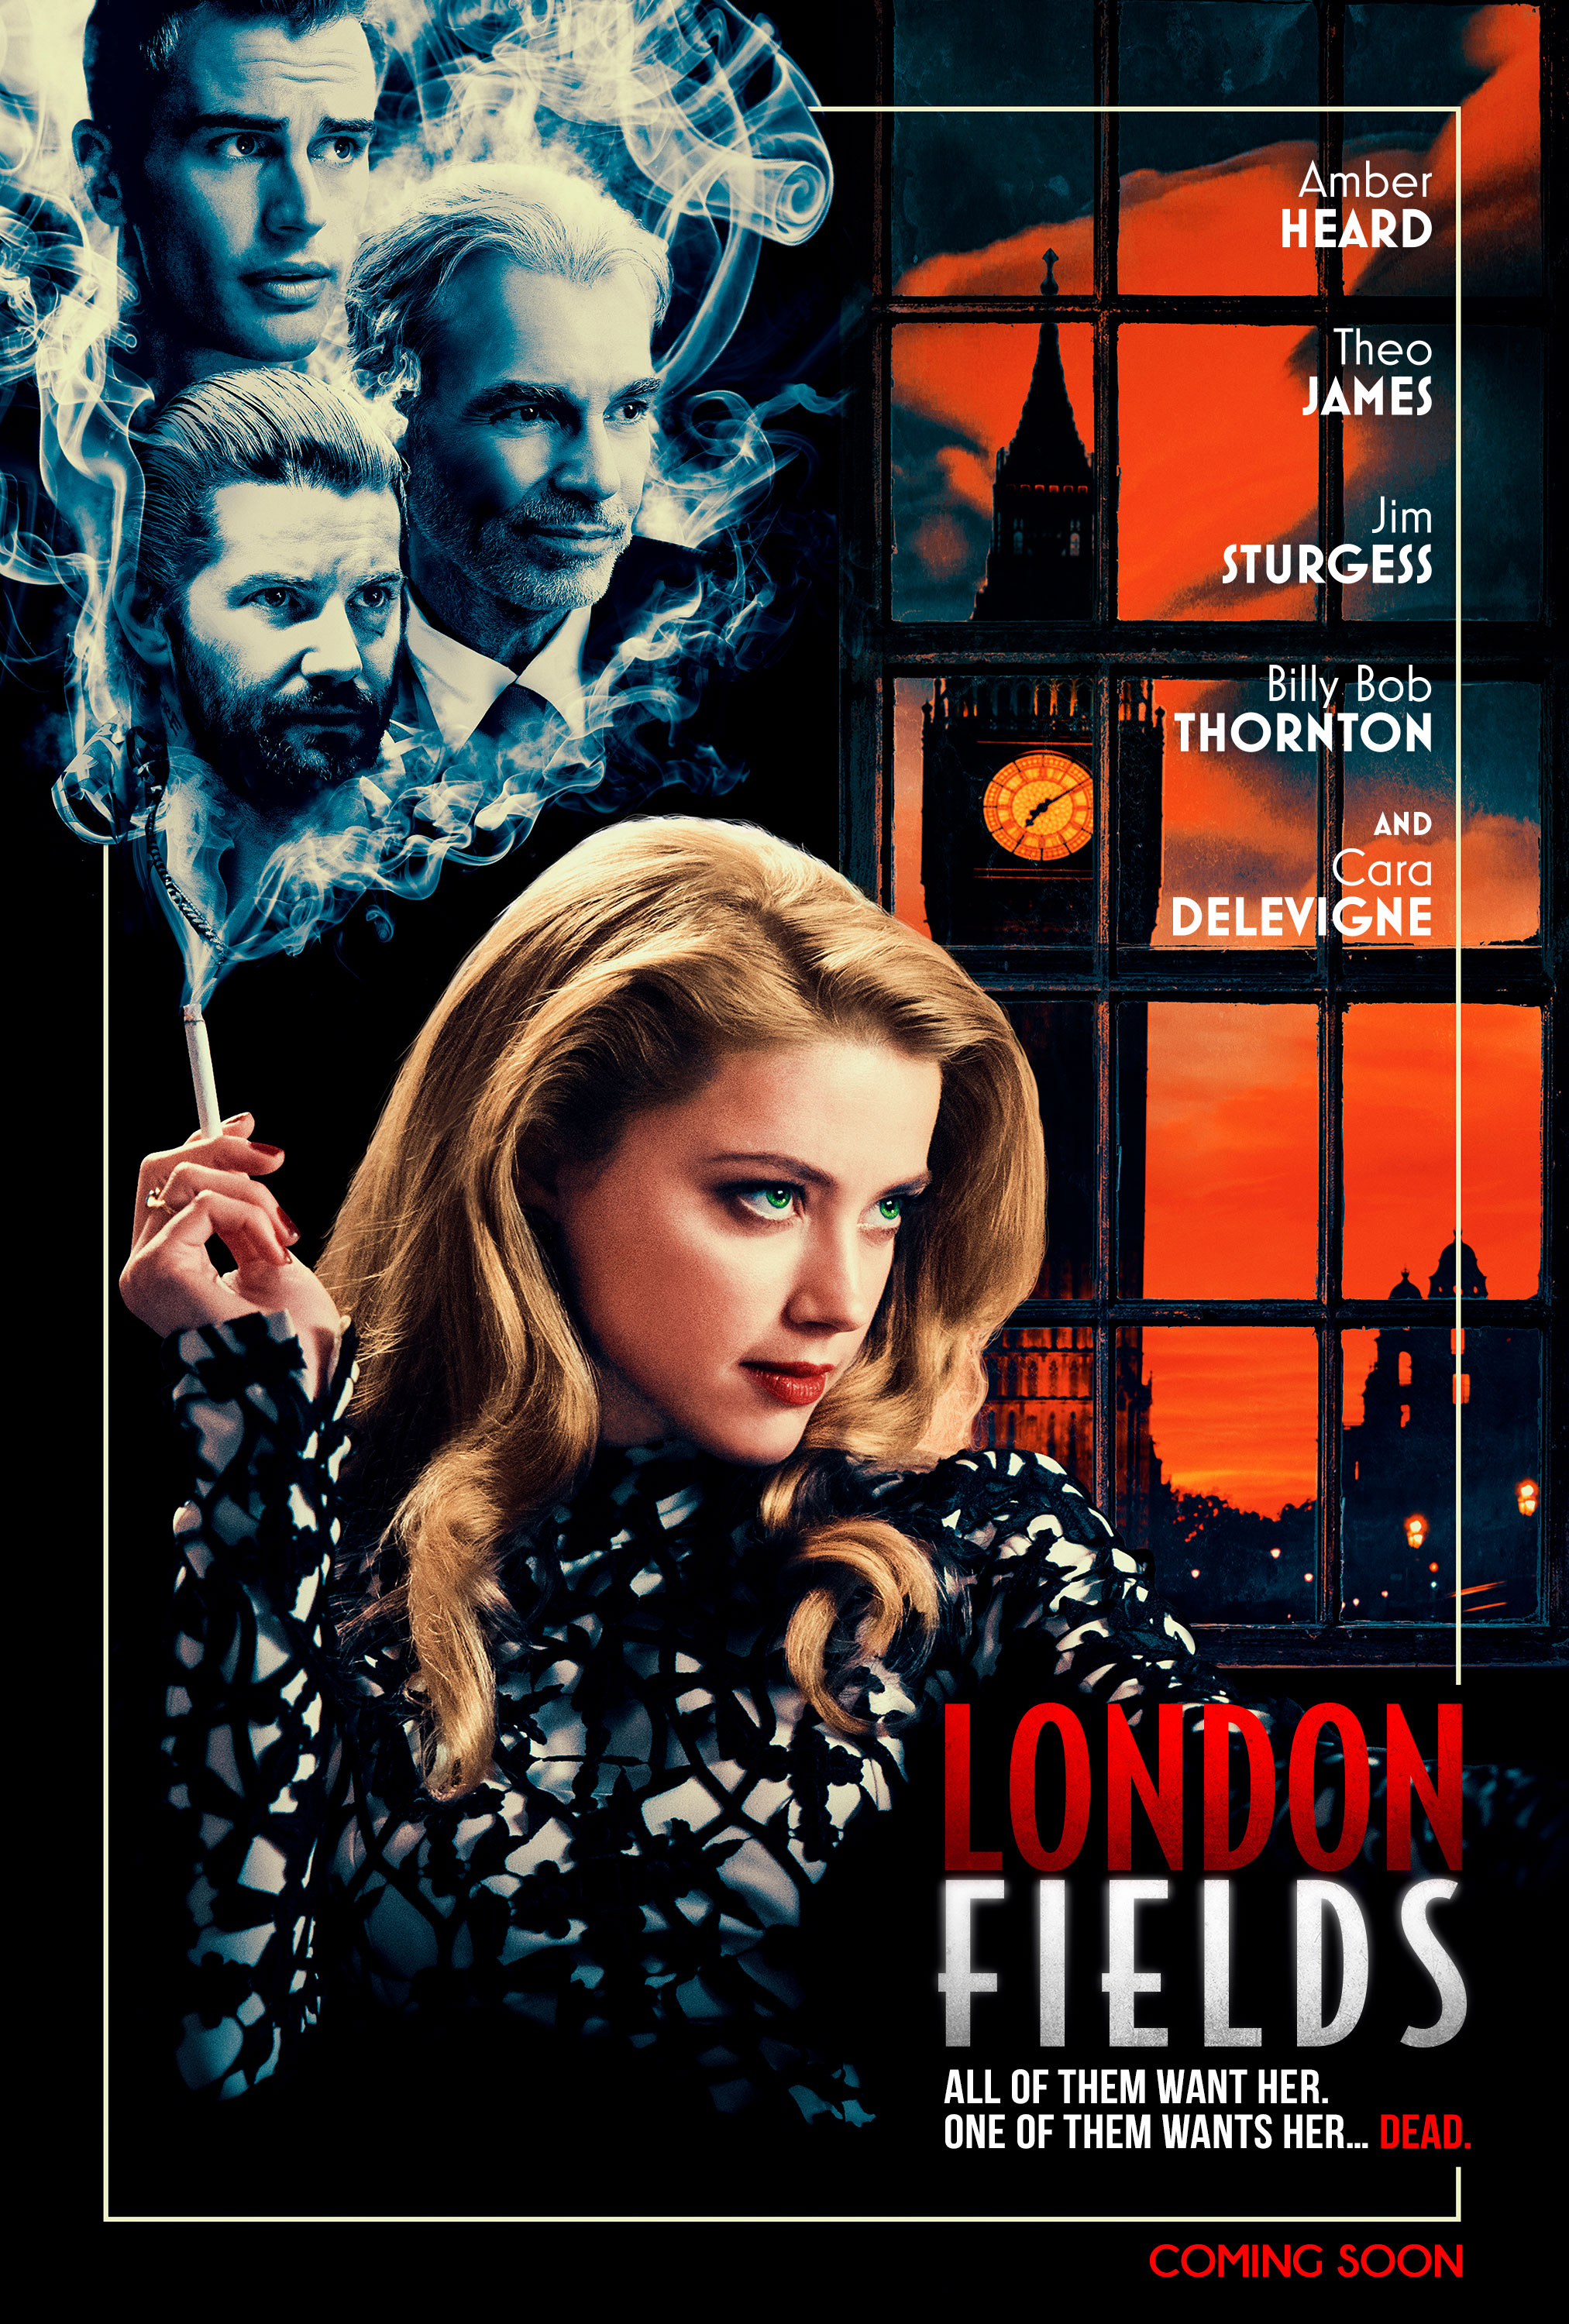 Nonton film London Fields layarkaca21 indoxx1 ganool online streaming terbaru